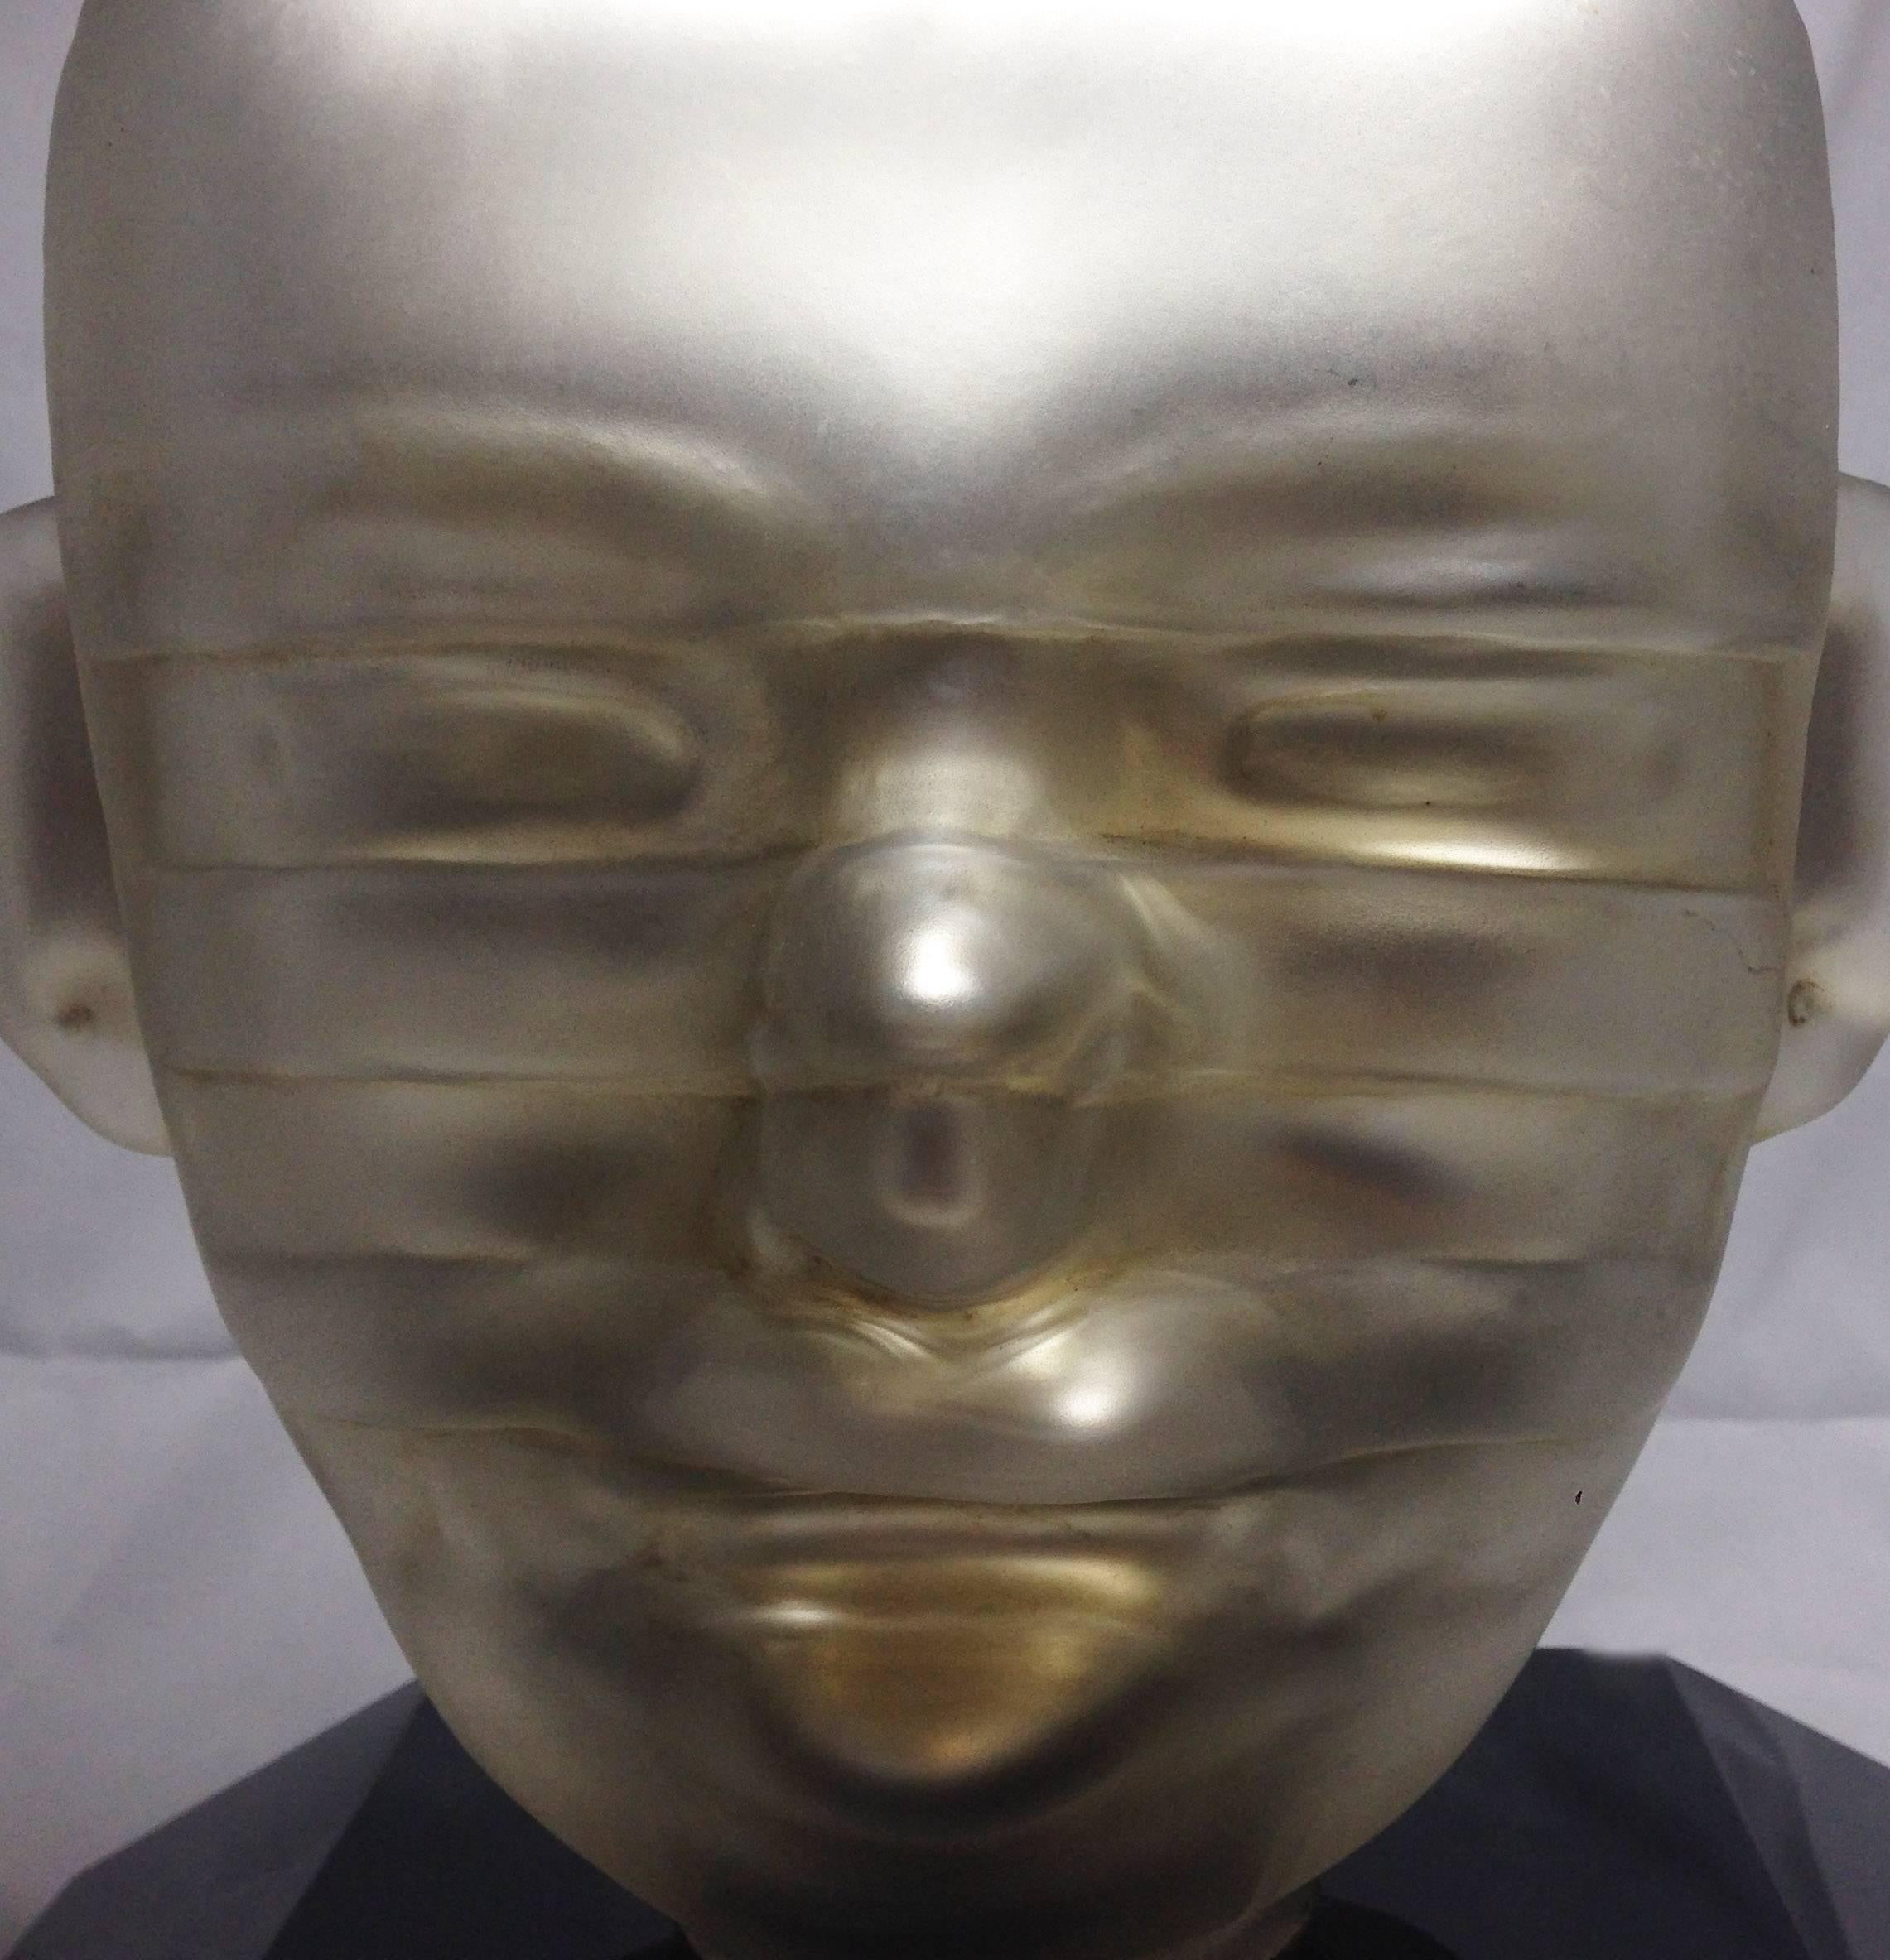 Mercury glass tribal mask sculpture signed by Pedro Ramirez Vazquez, black marble base.